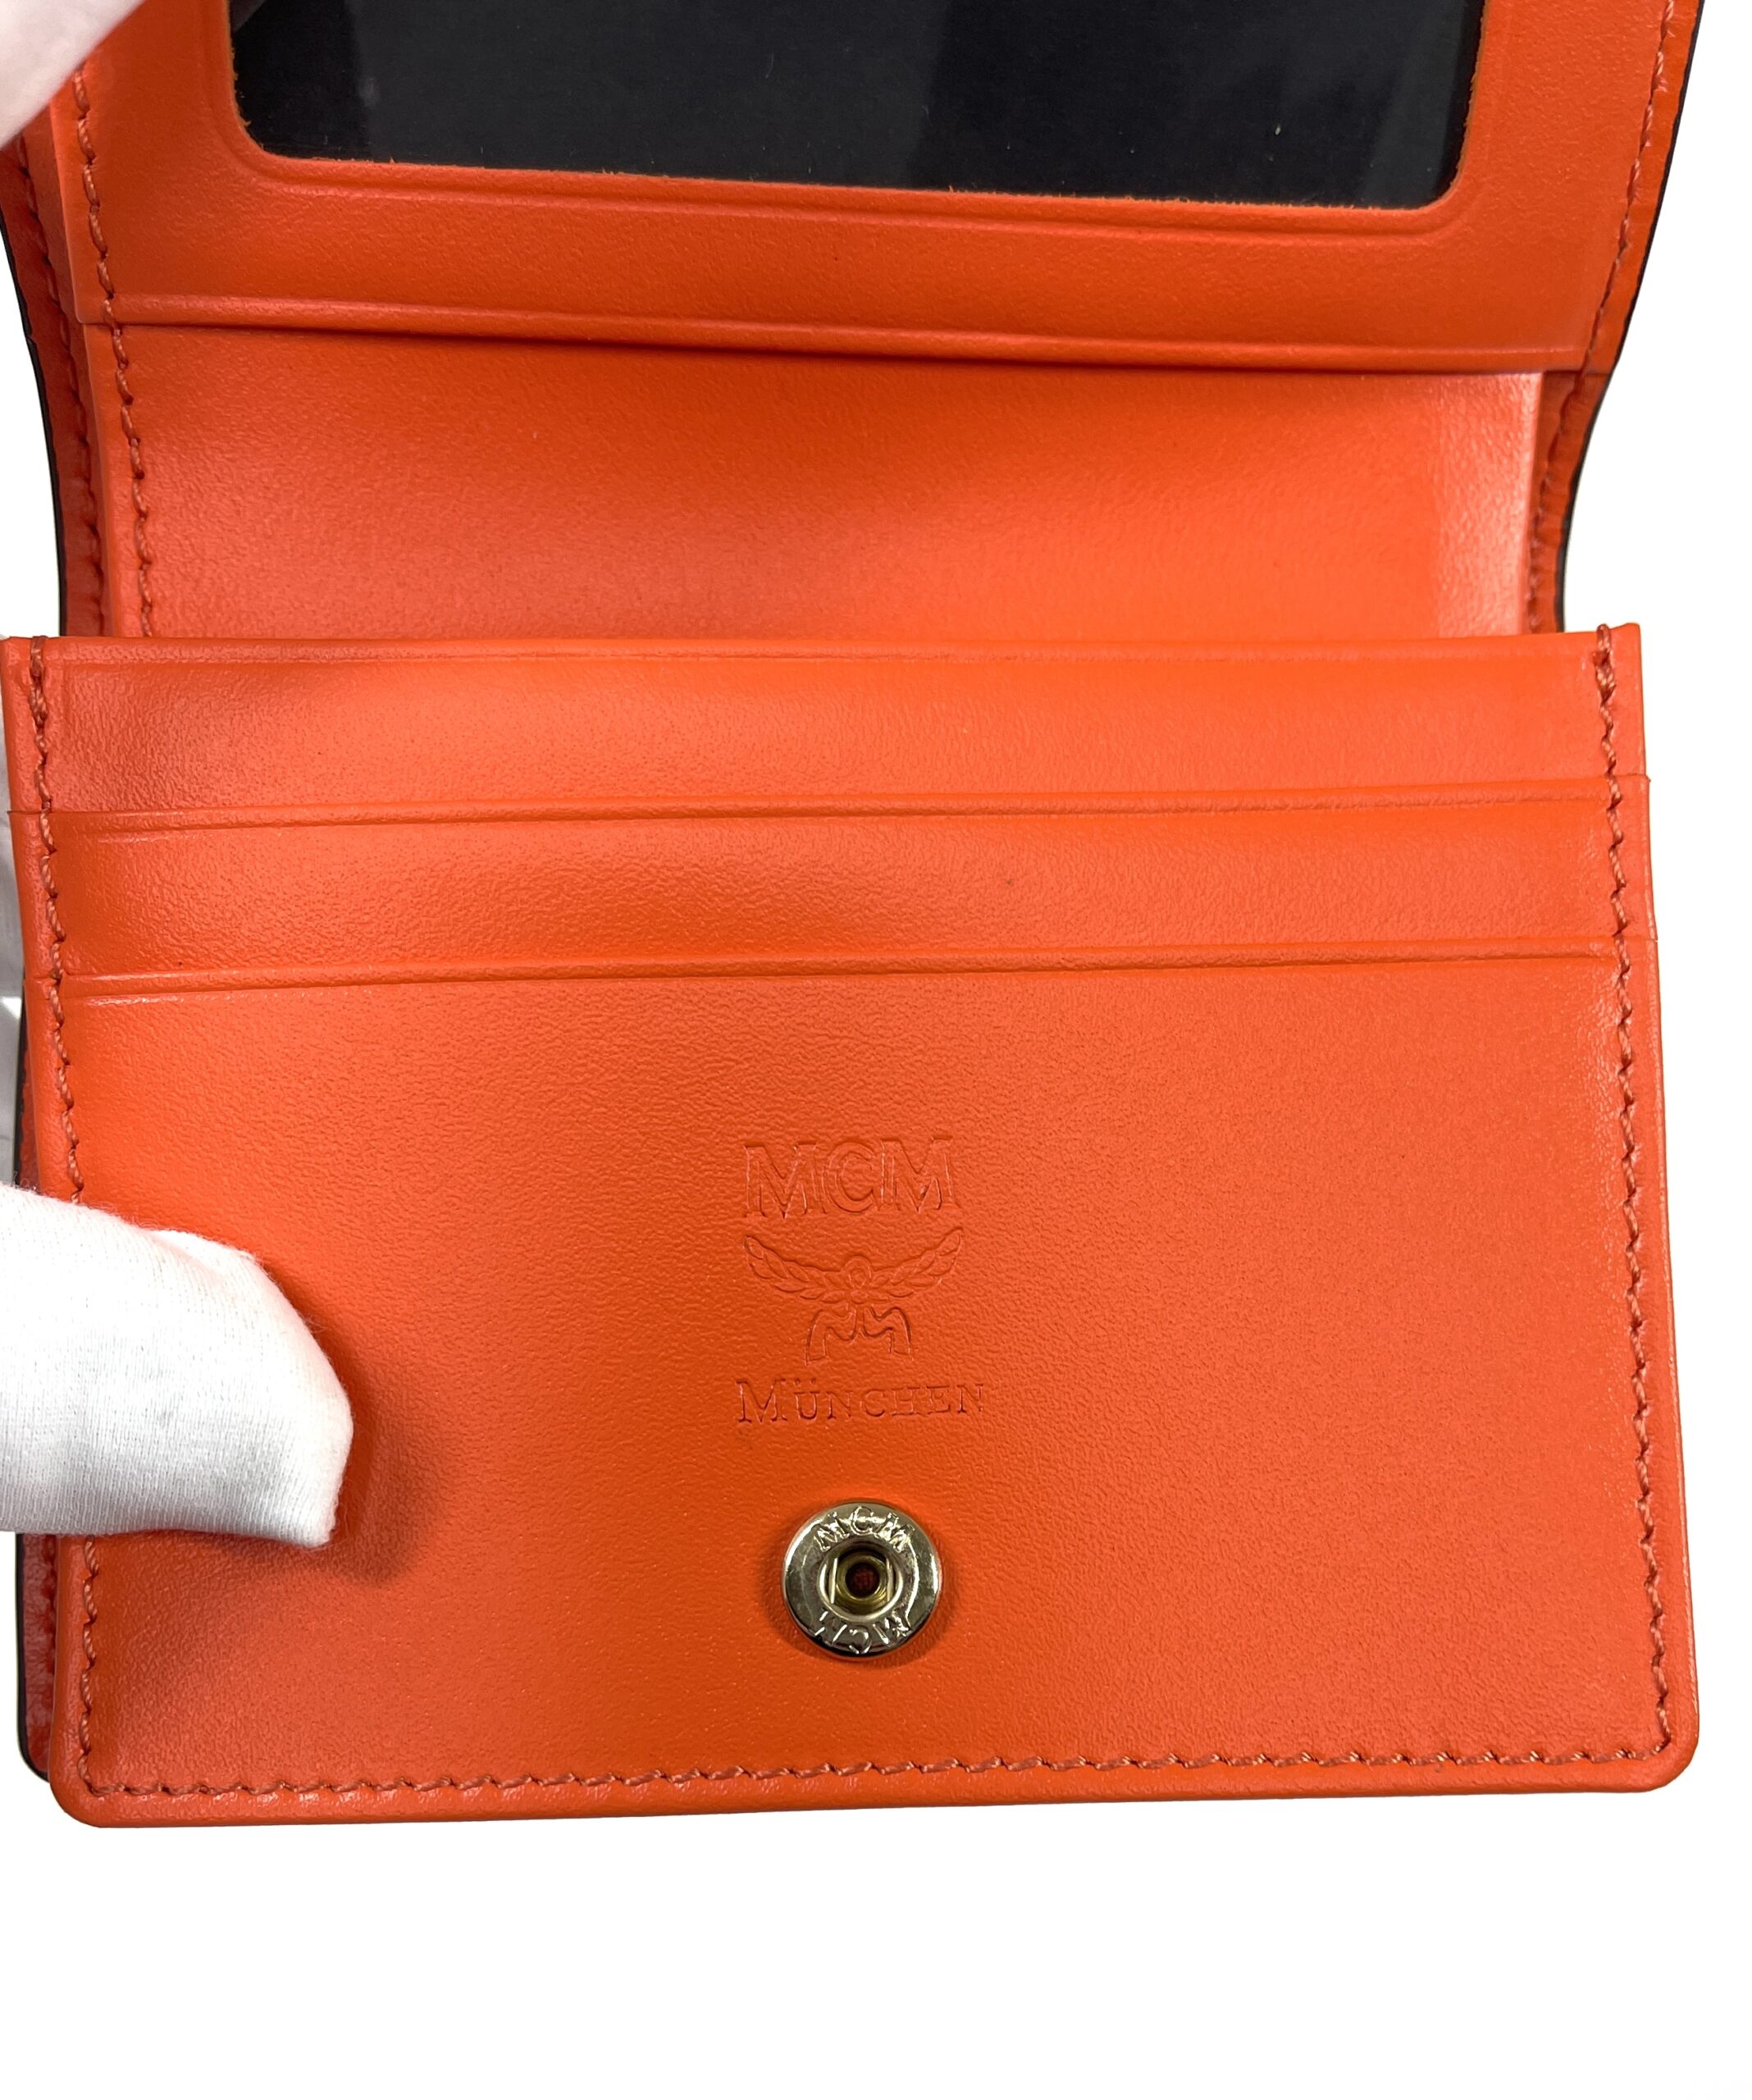 Men's bifold leather wallet with flap, saffiano orange